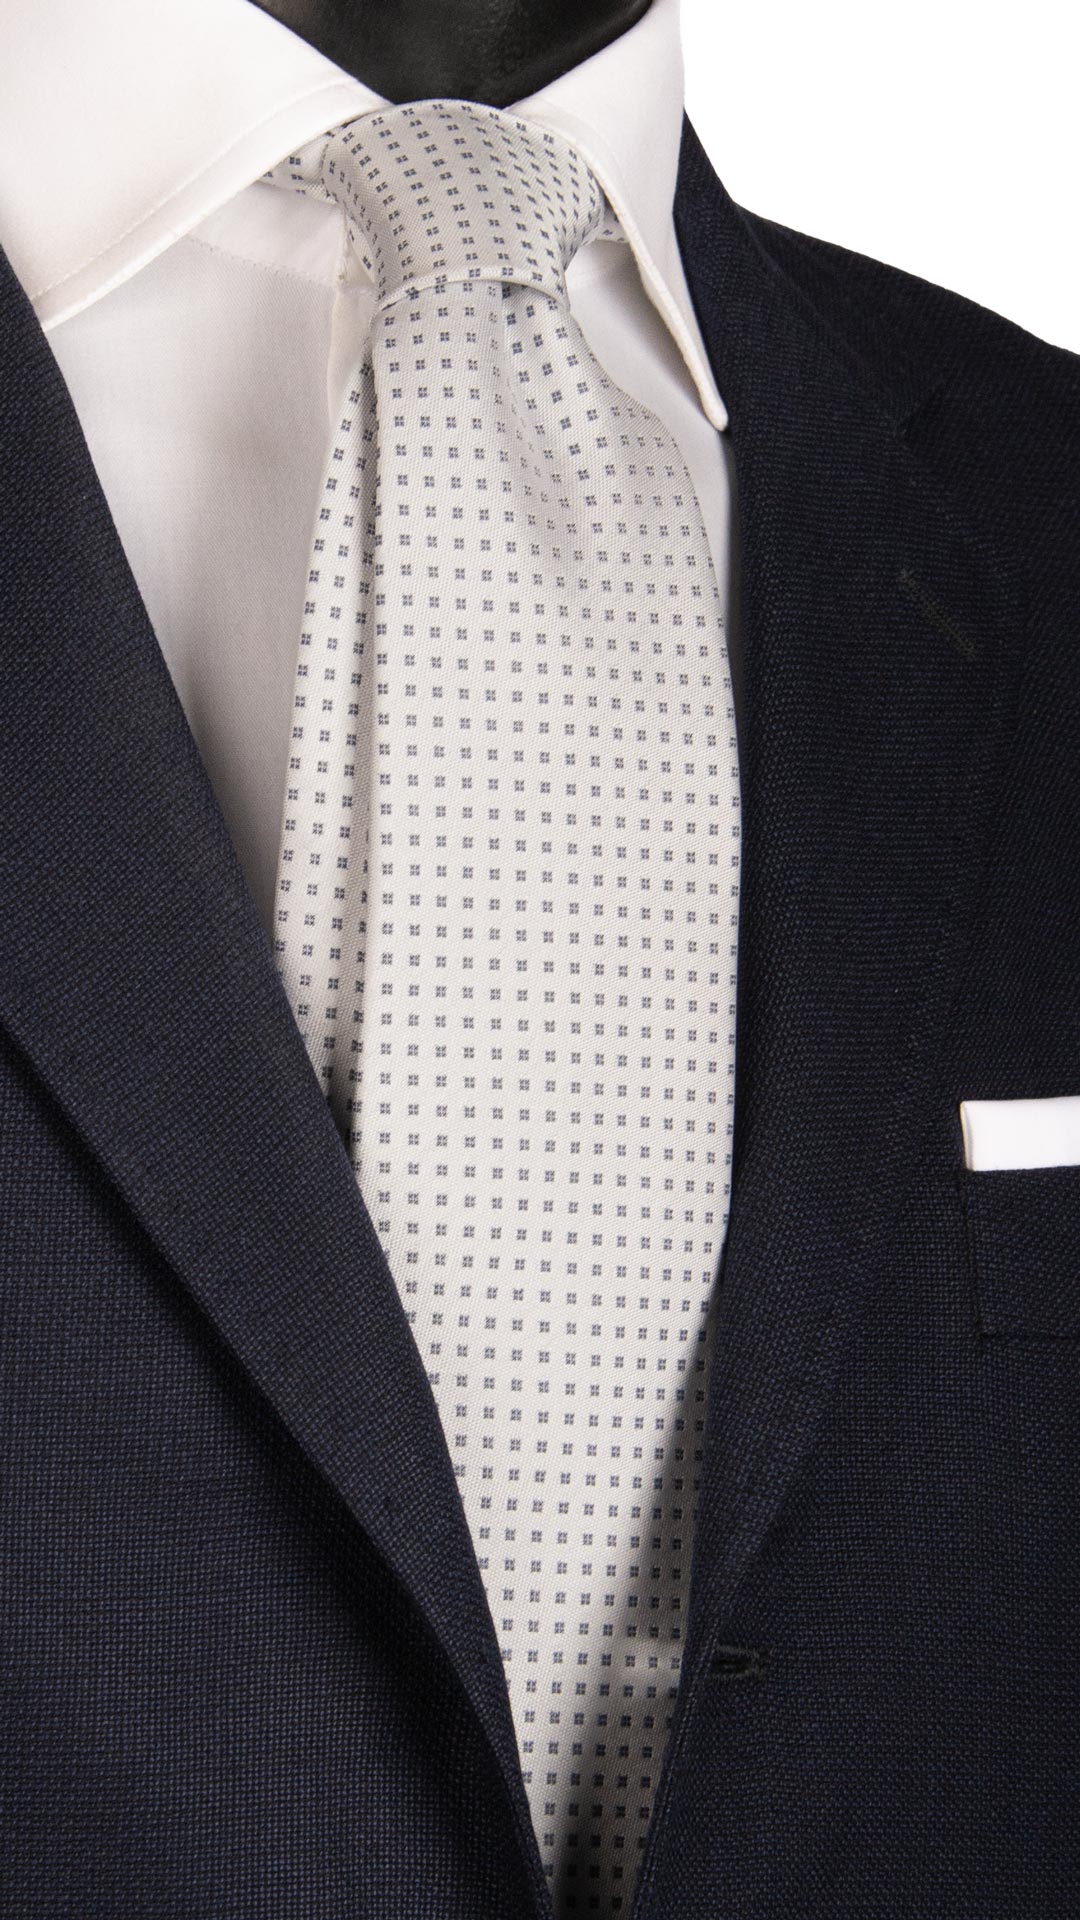 Cravatta da Cerimonia di Seta Bianco Perla Fantasia Blu CY6611 Made in Italy Graffeo Cravatte